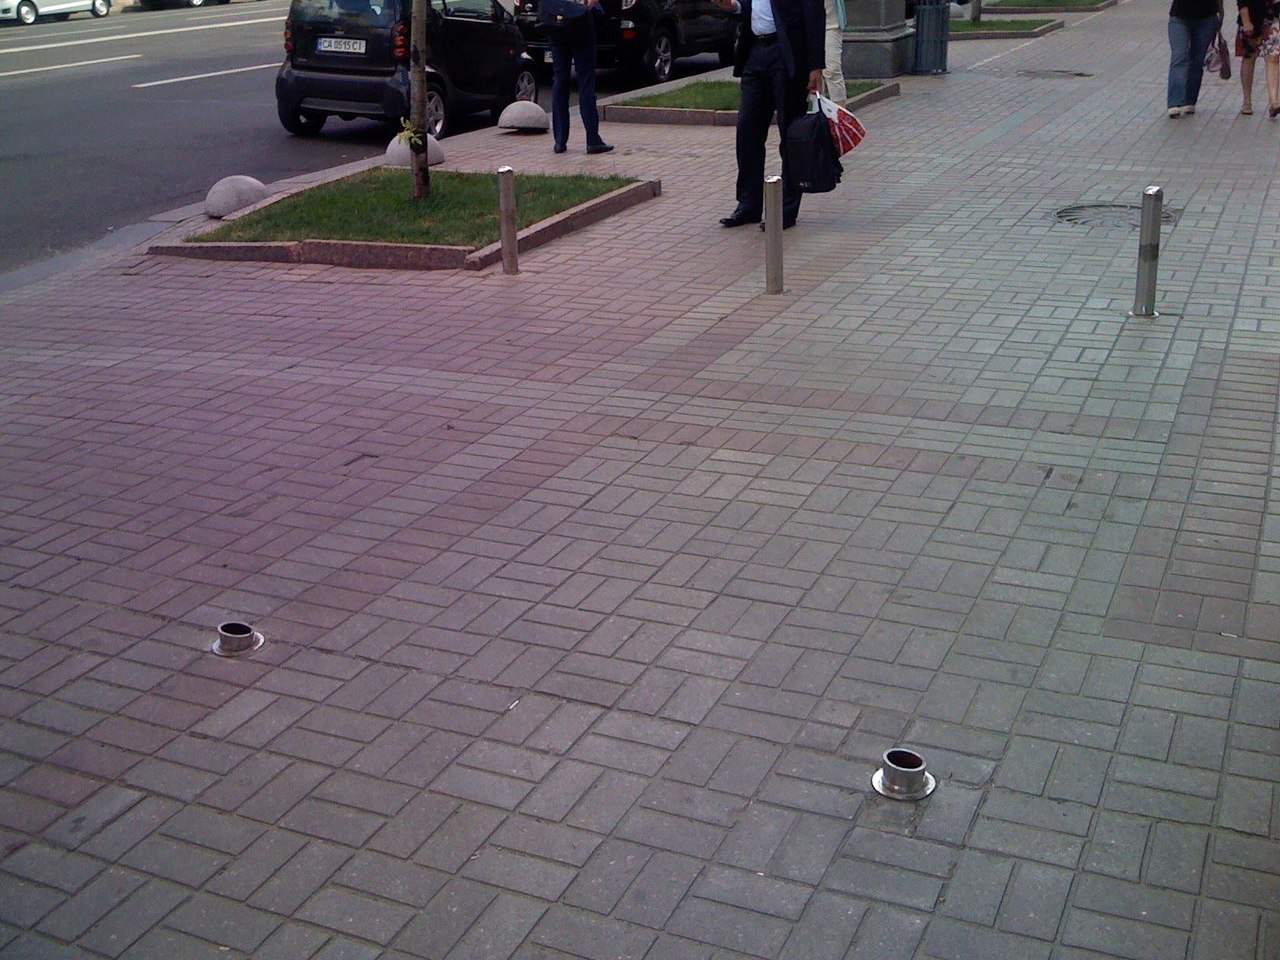 Безграничная свобода: в Киеве недалеко от мэрии на тротуаре срезали столбики (фото)